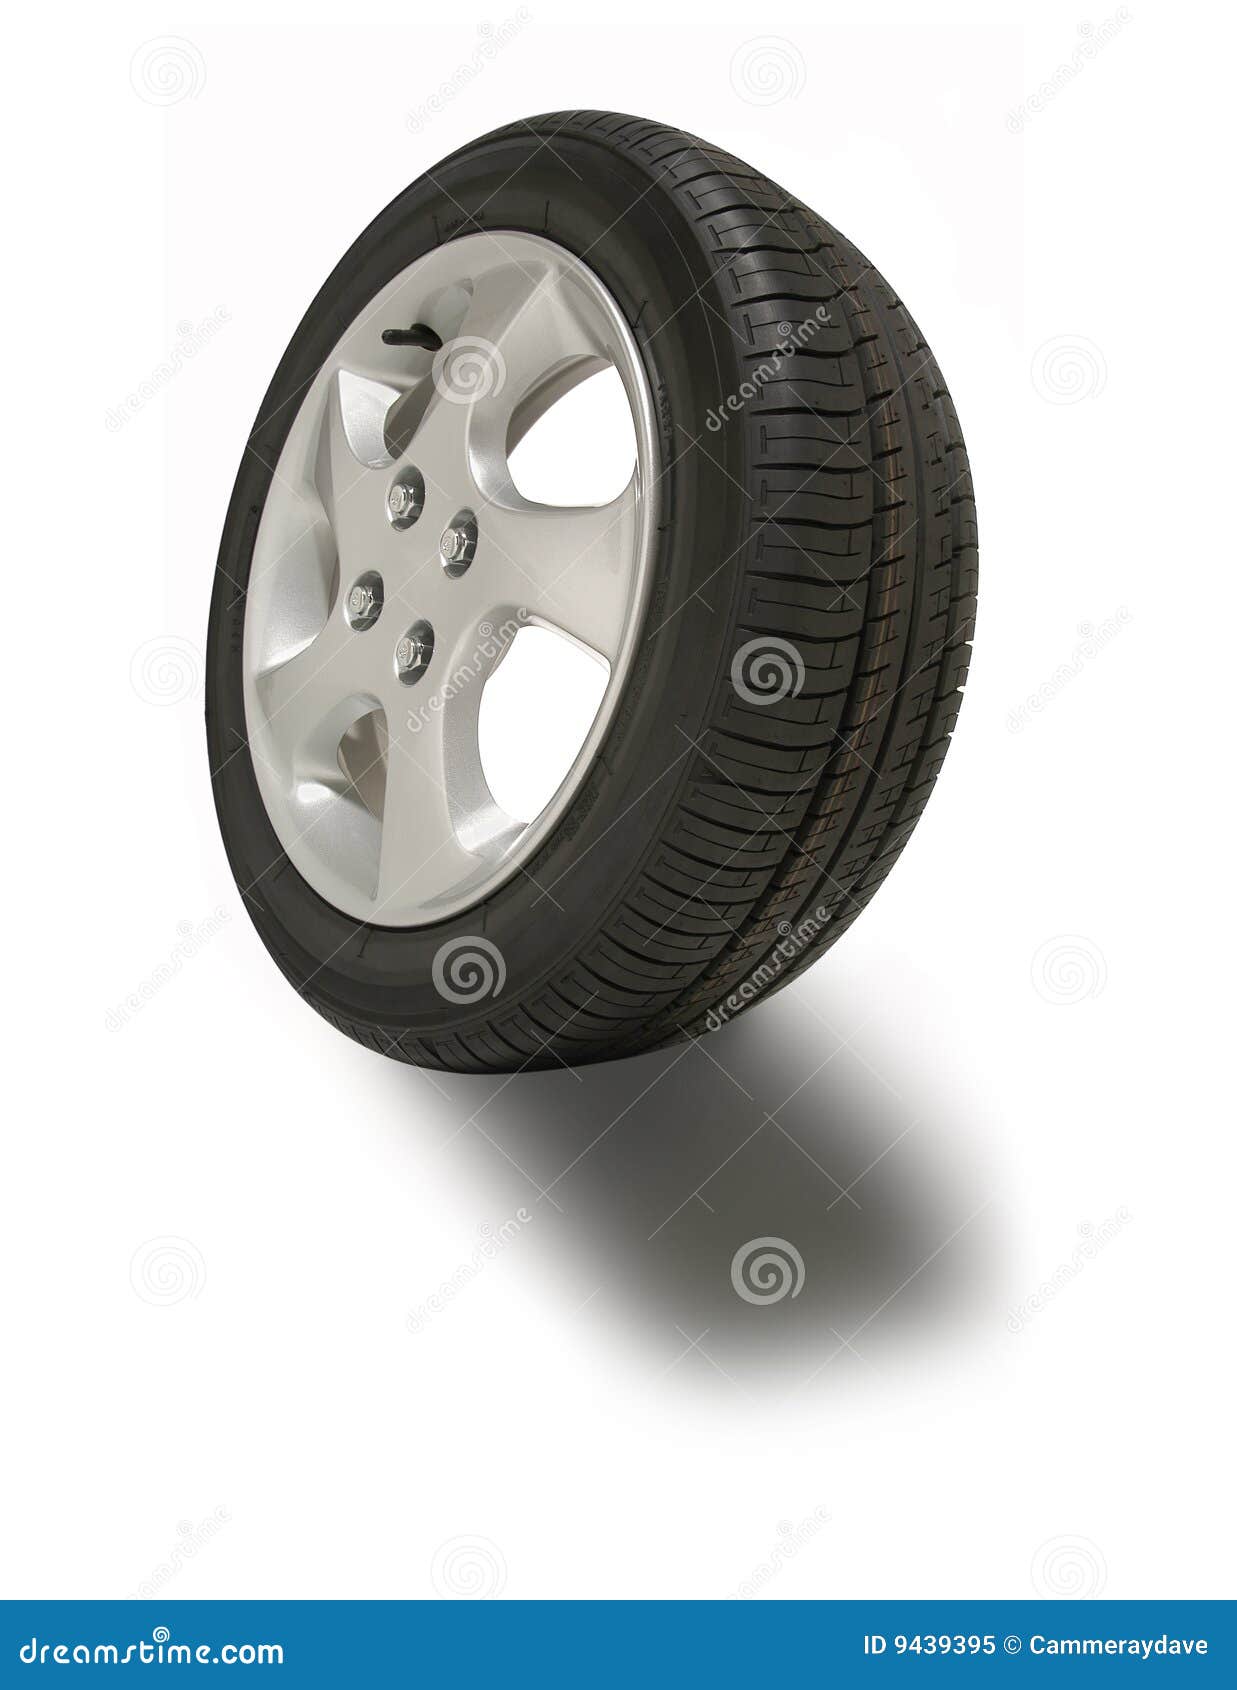 mag wheel tire tyre